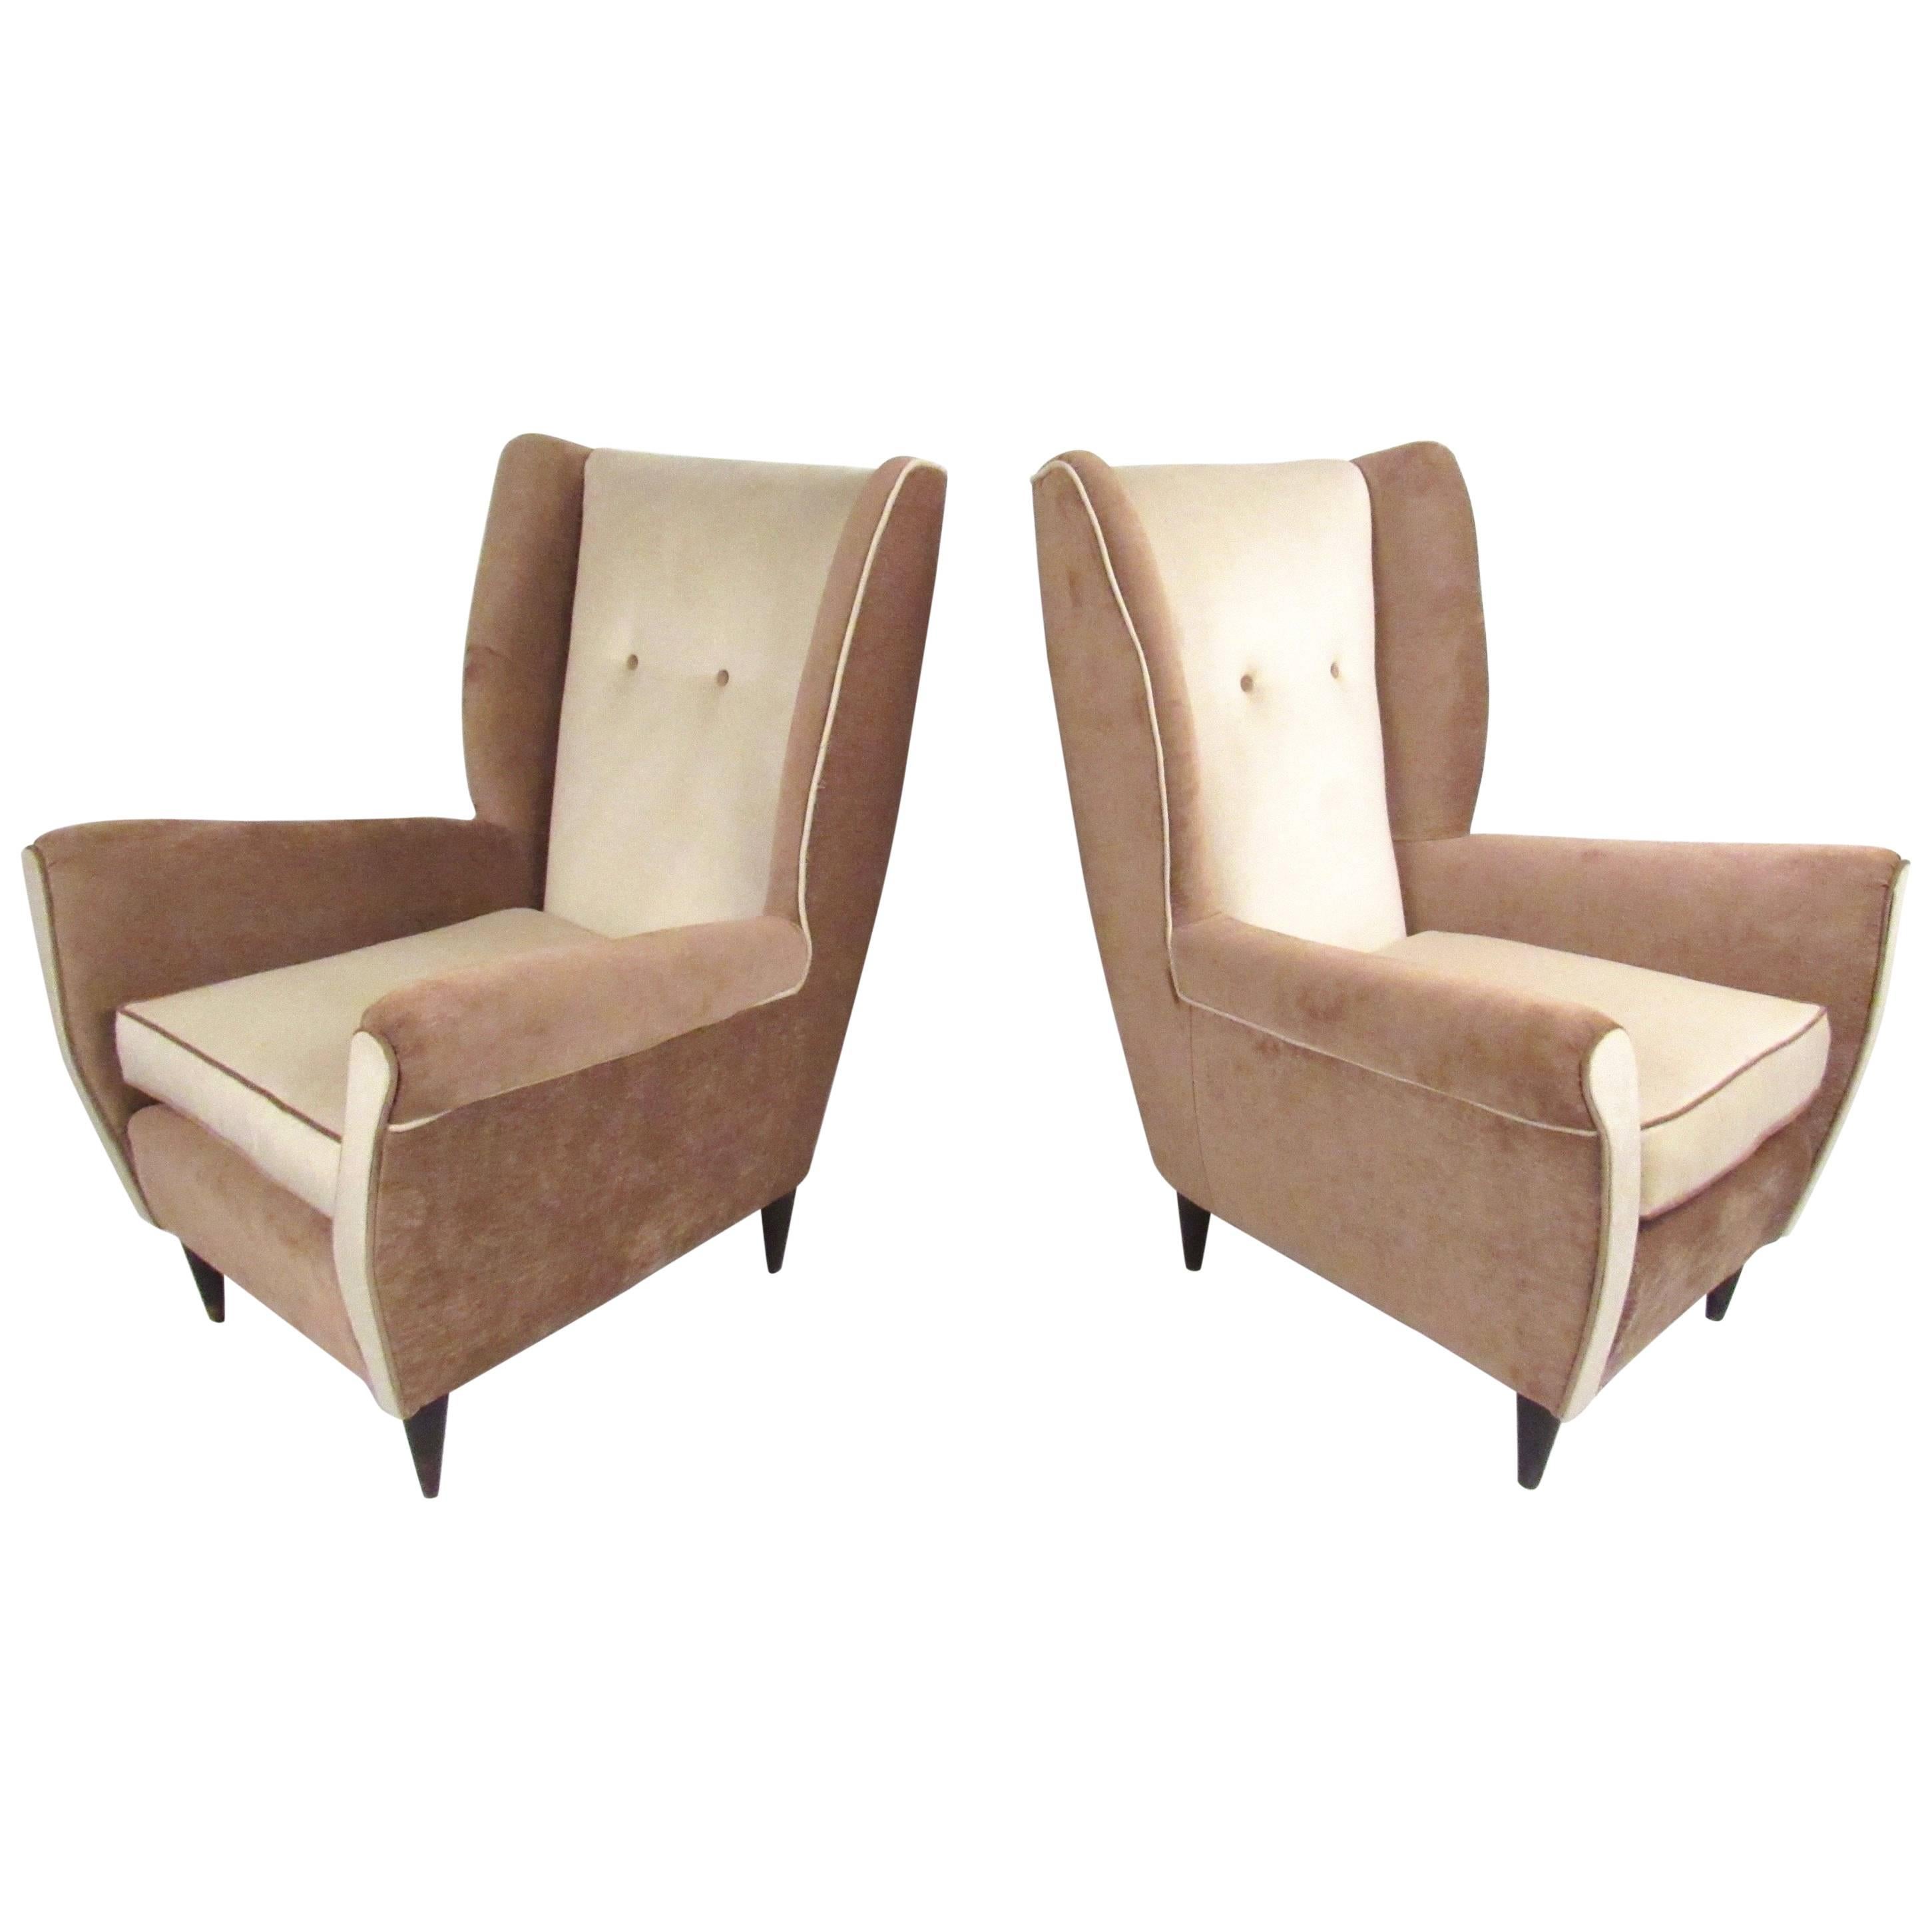 Pair of Modern Italian High Back Lounge Chairs